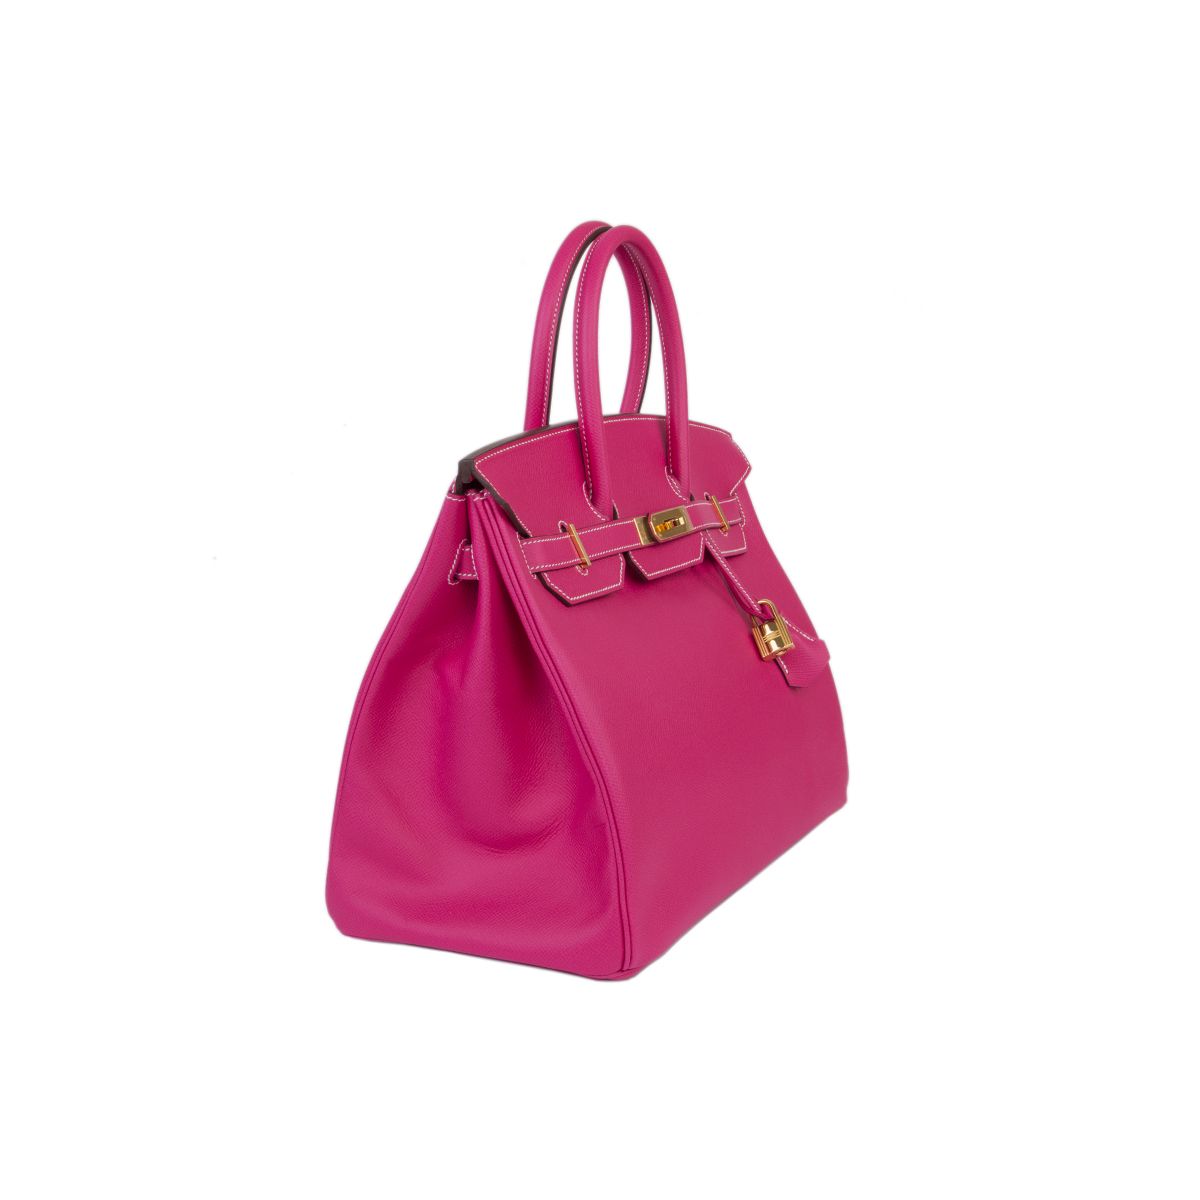 Hermes Birkin Bag In Hot Pink